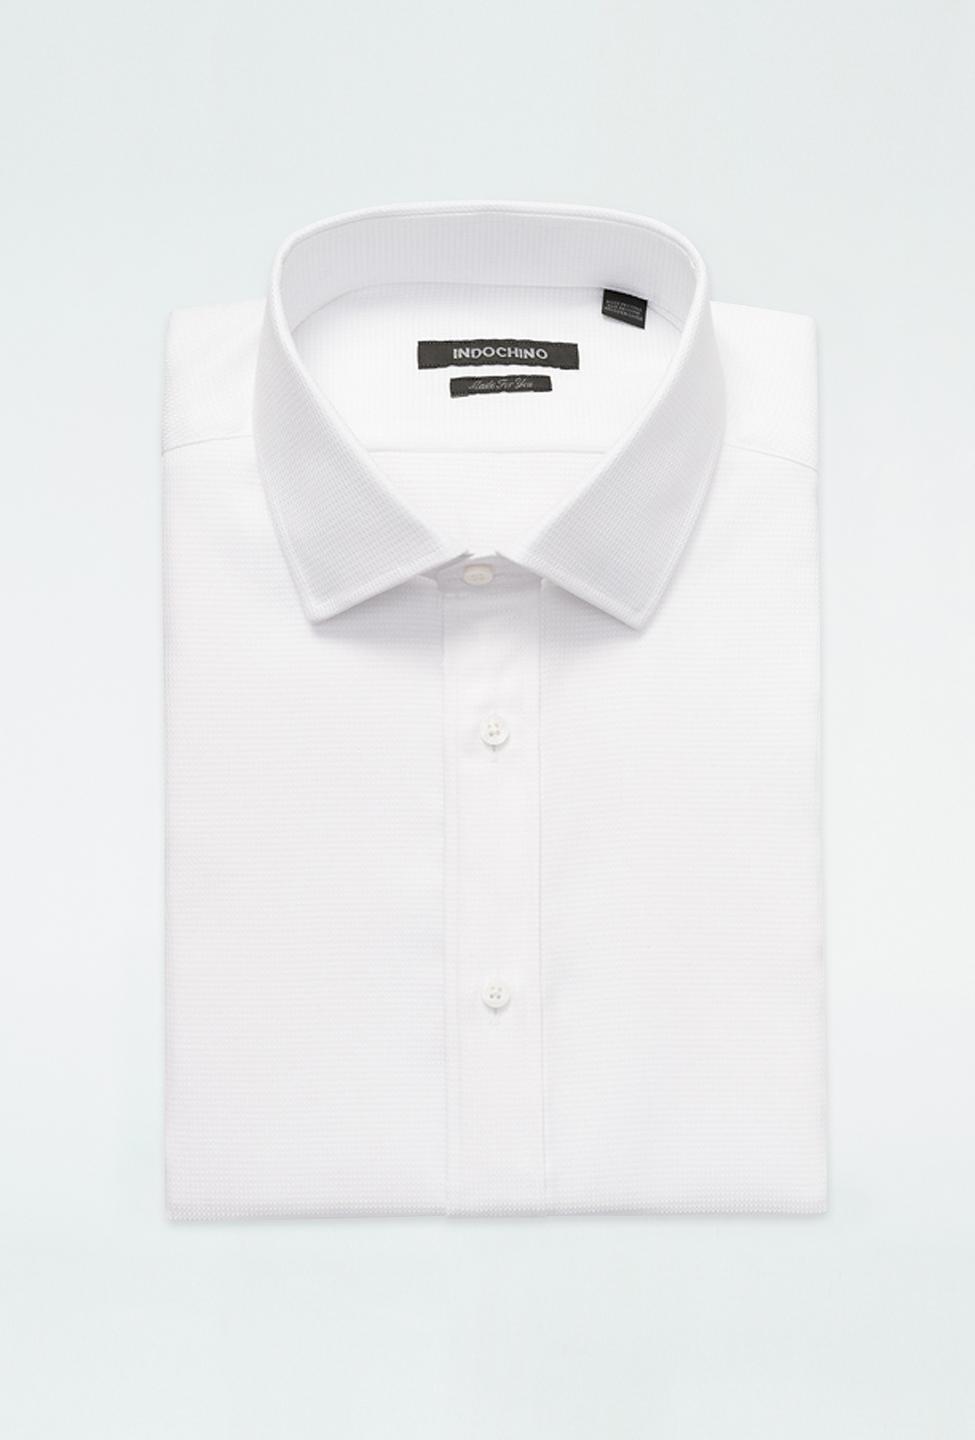 White shirt - Halesworth Solid Design from Premium Indochino Collection